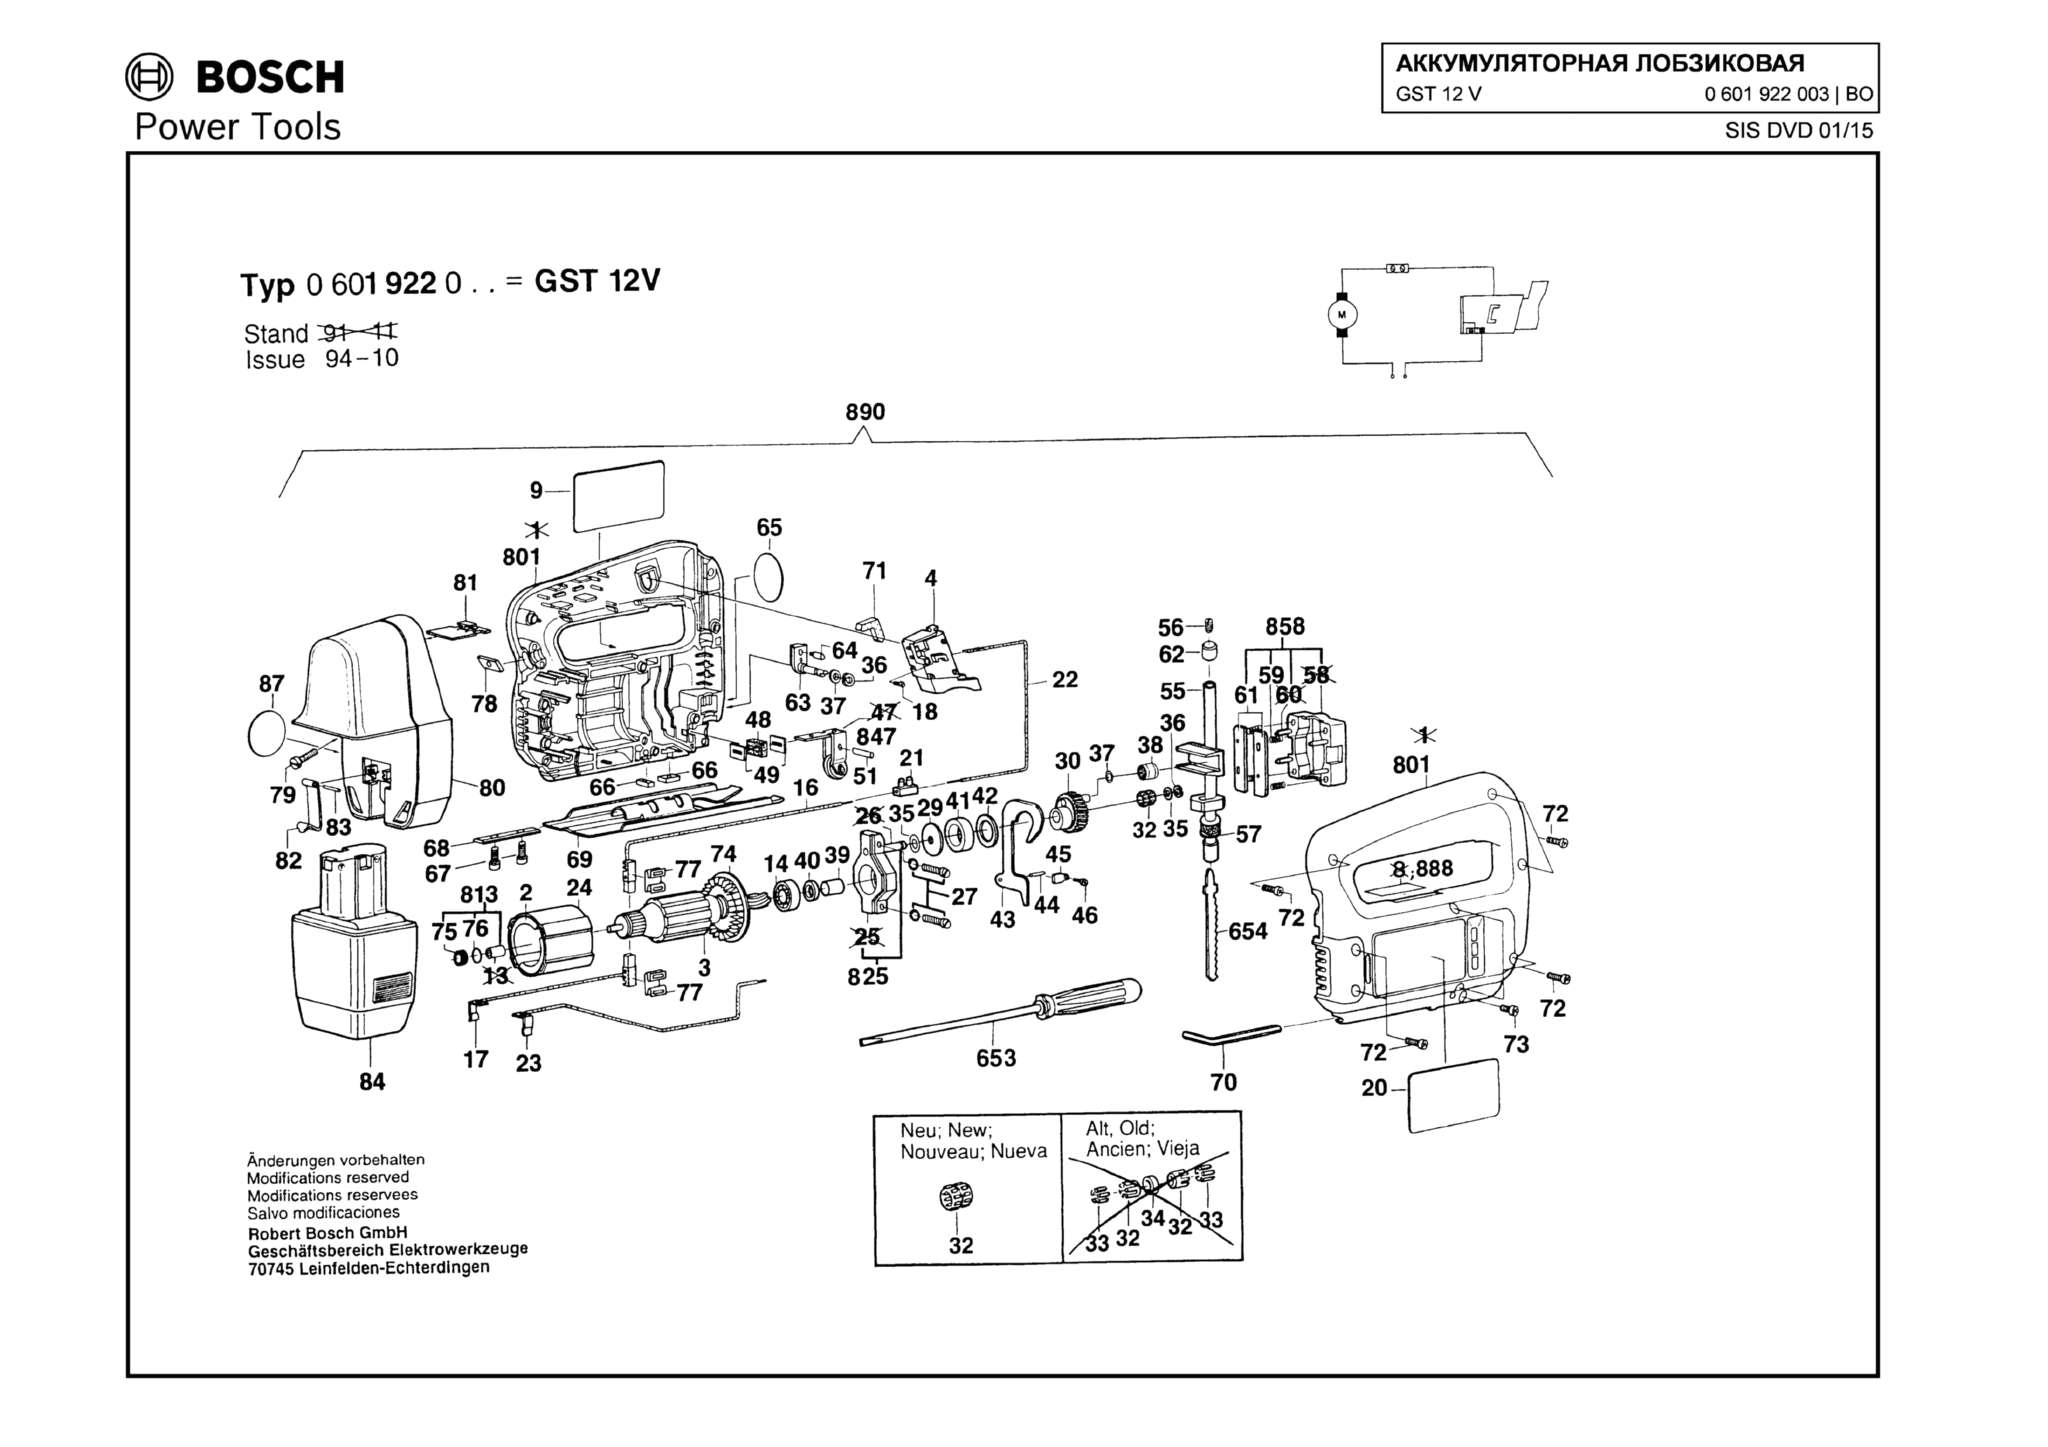 Запчасти, схема и деталировка Bosch GST 12 V (ТИП 0601922003)